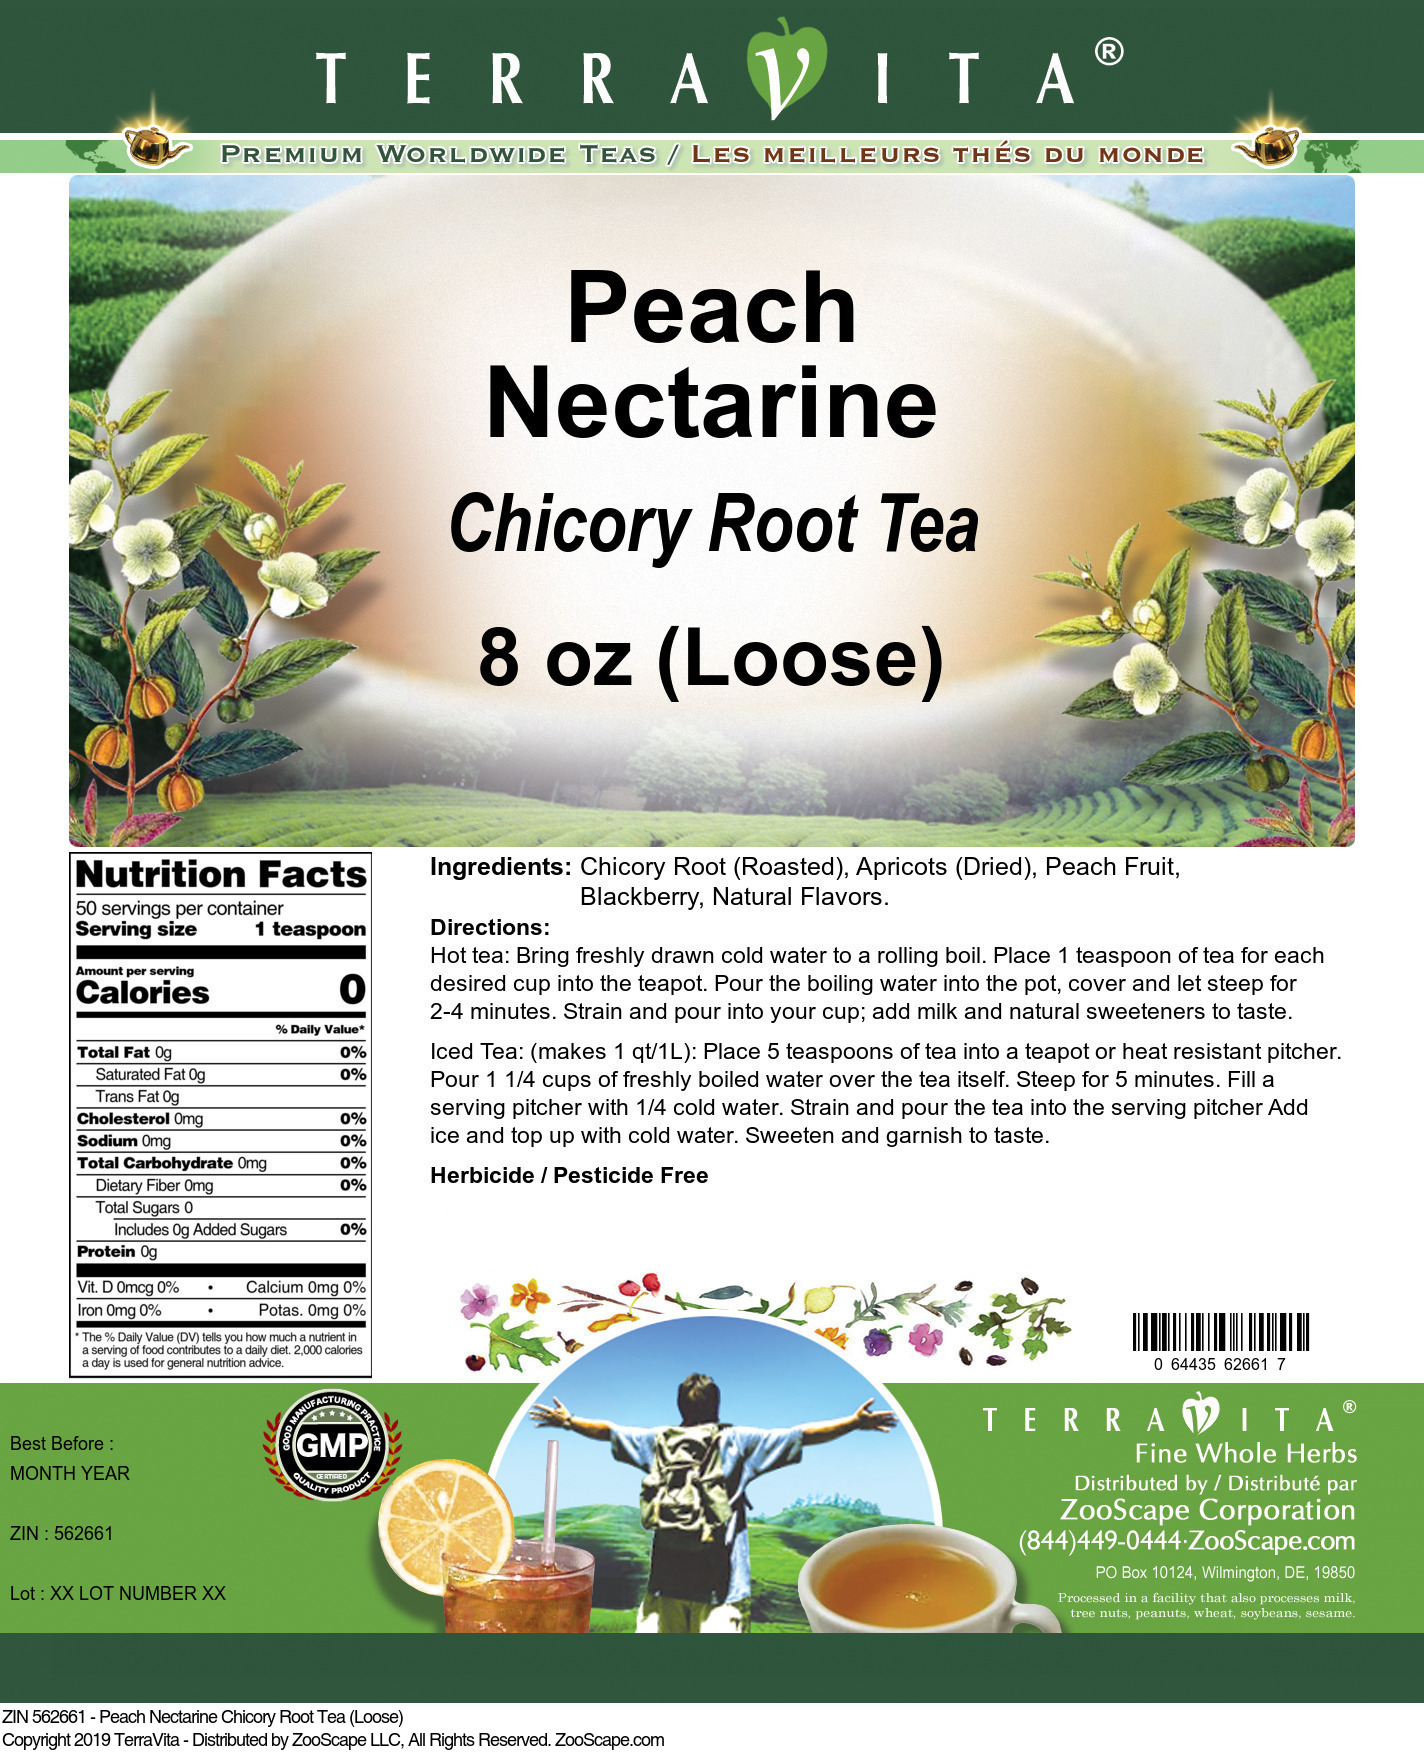 Peach Nectarine Chicory Root Tea (Loose) - Label